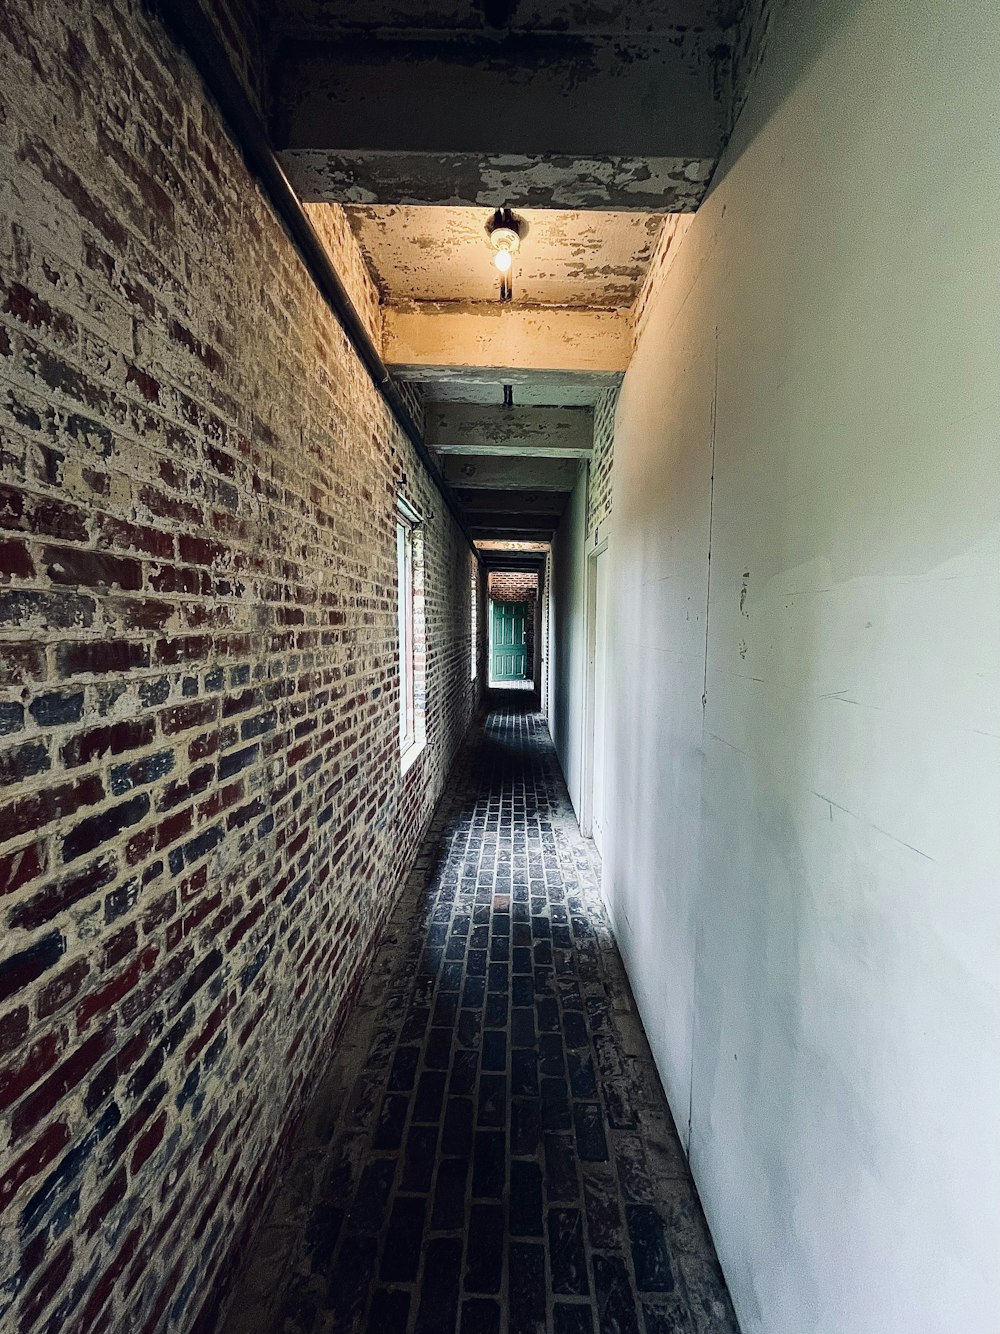 a long narrow hallway with a brick wall